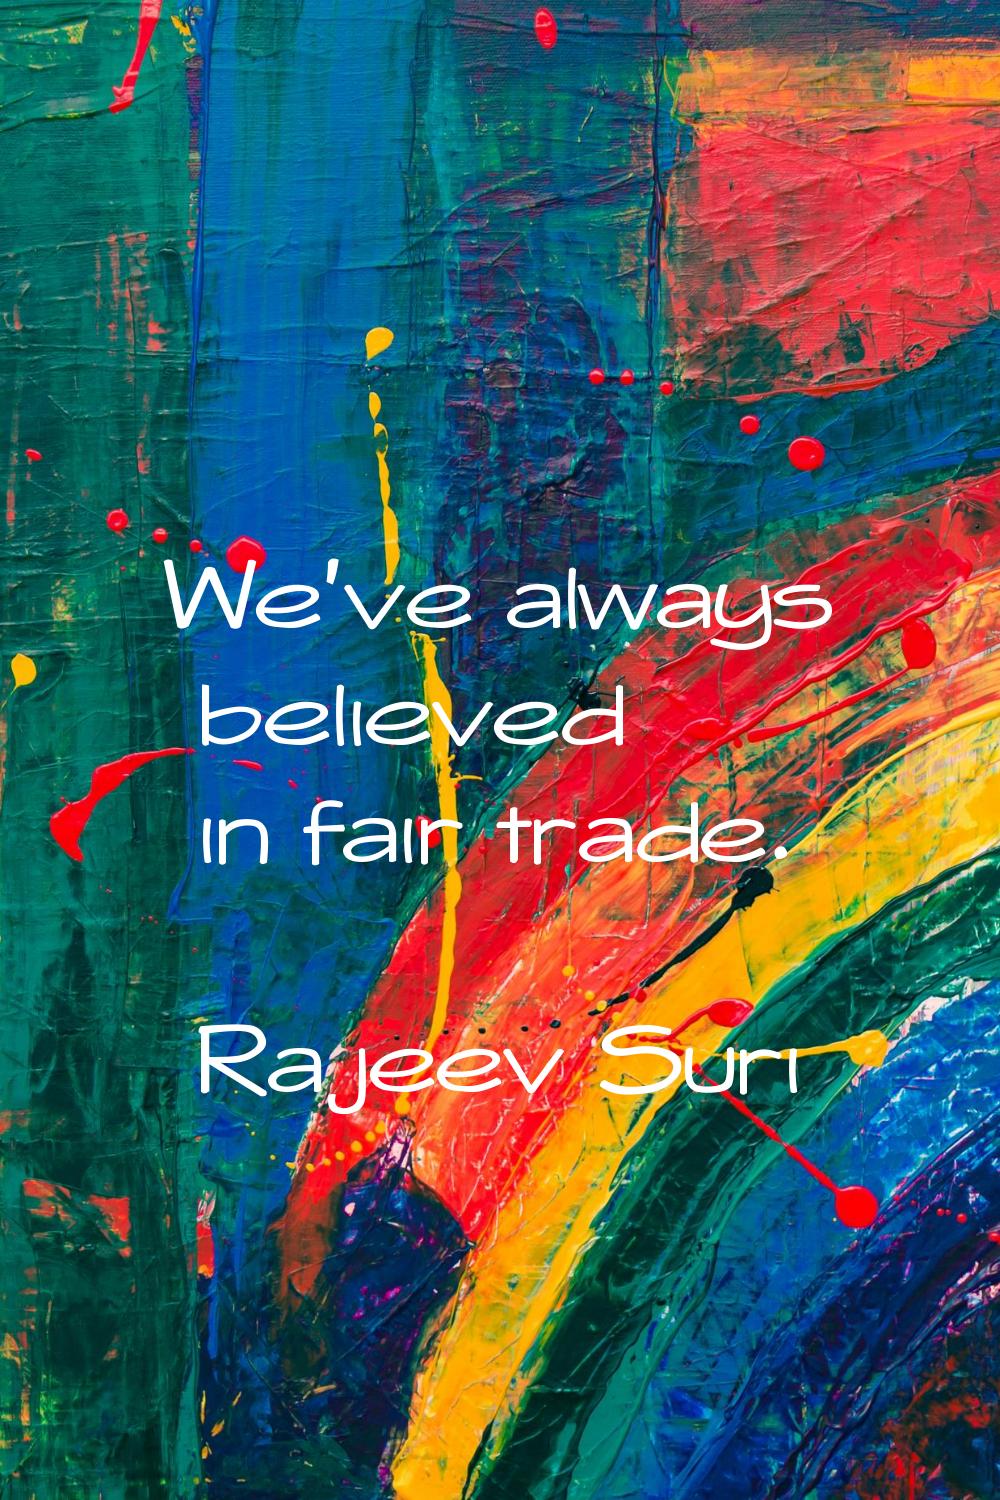 We've always believed in fair trade.